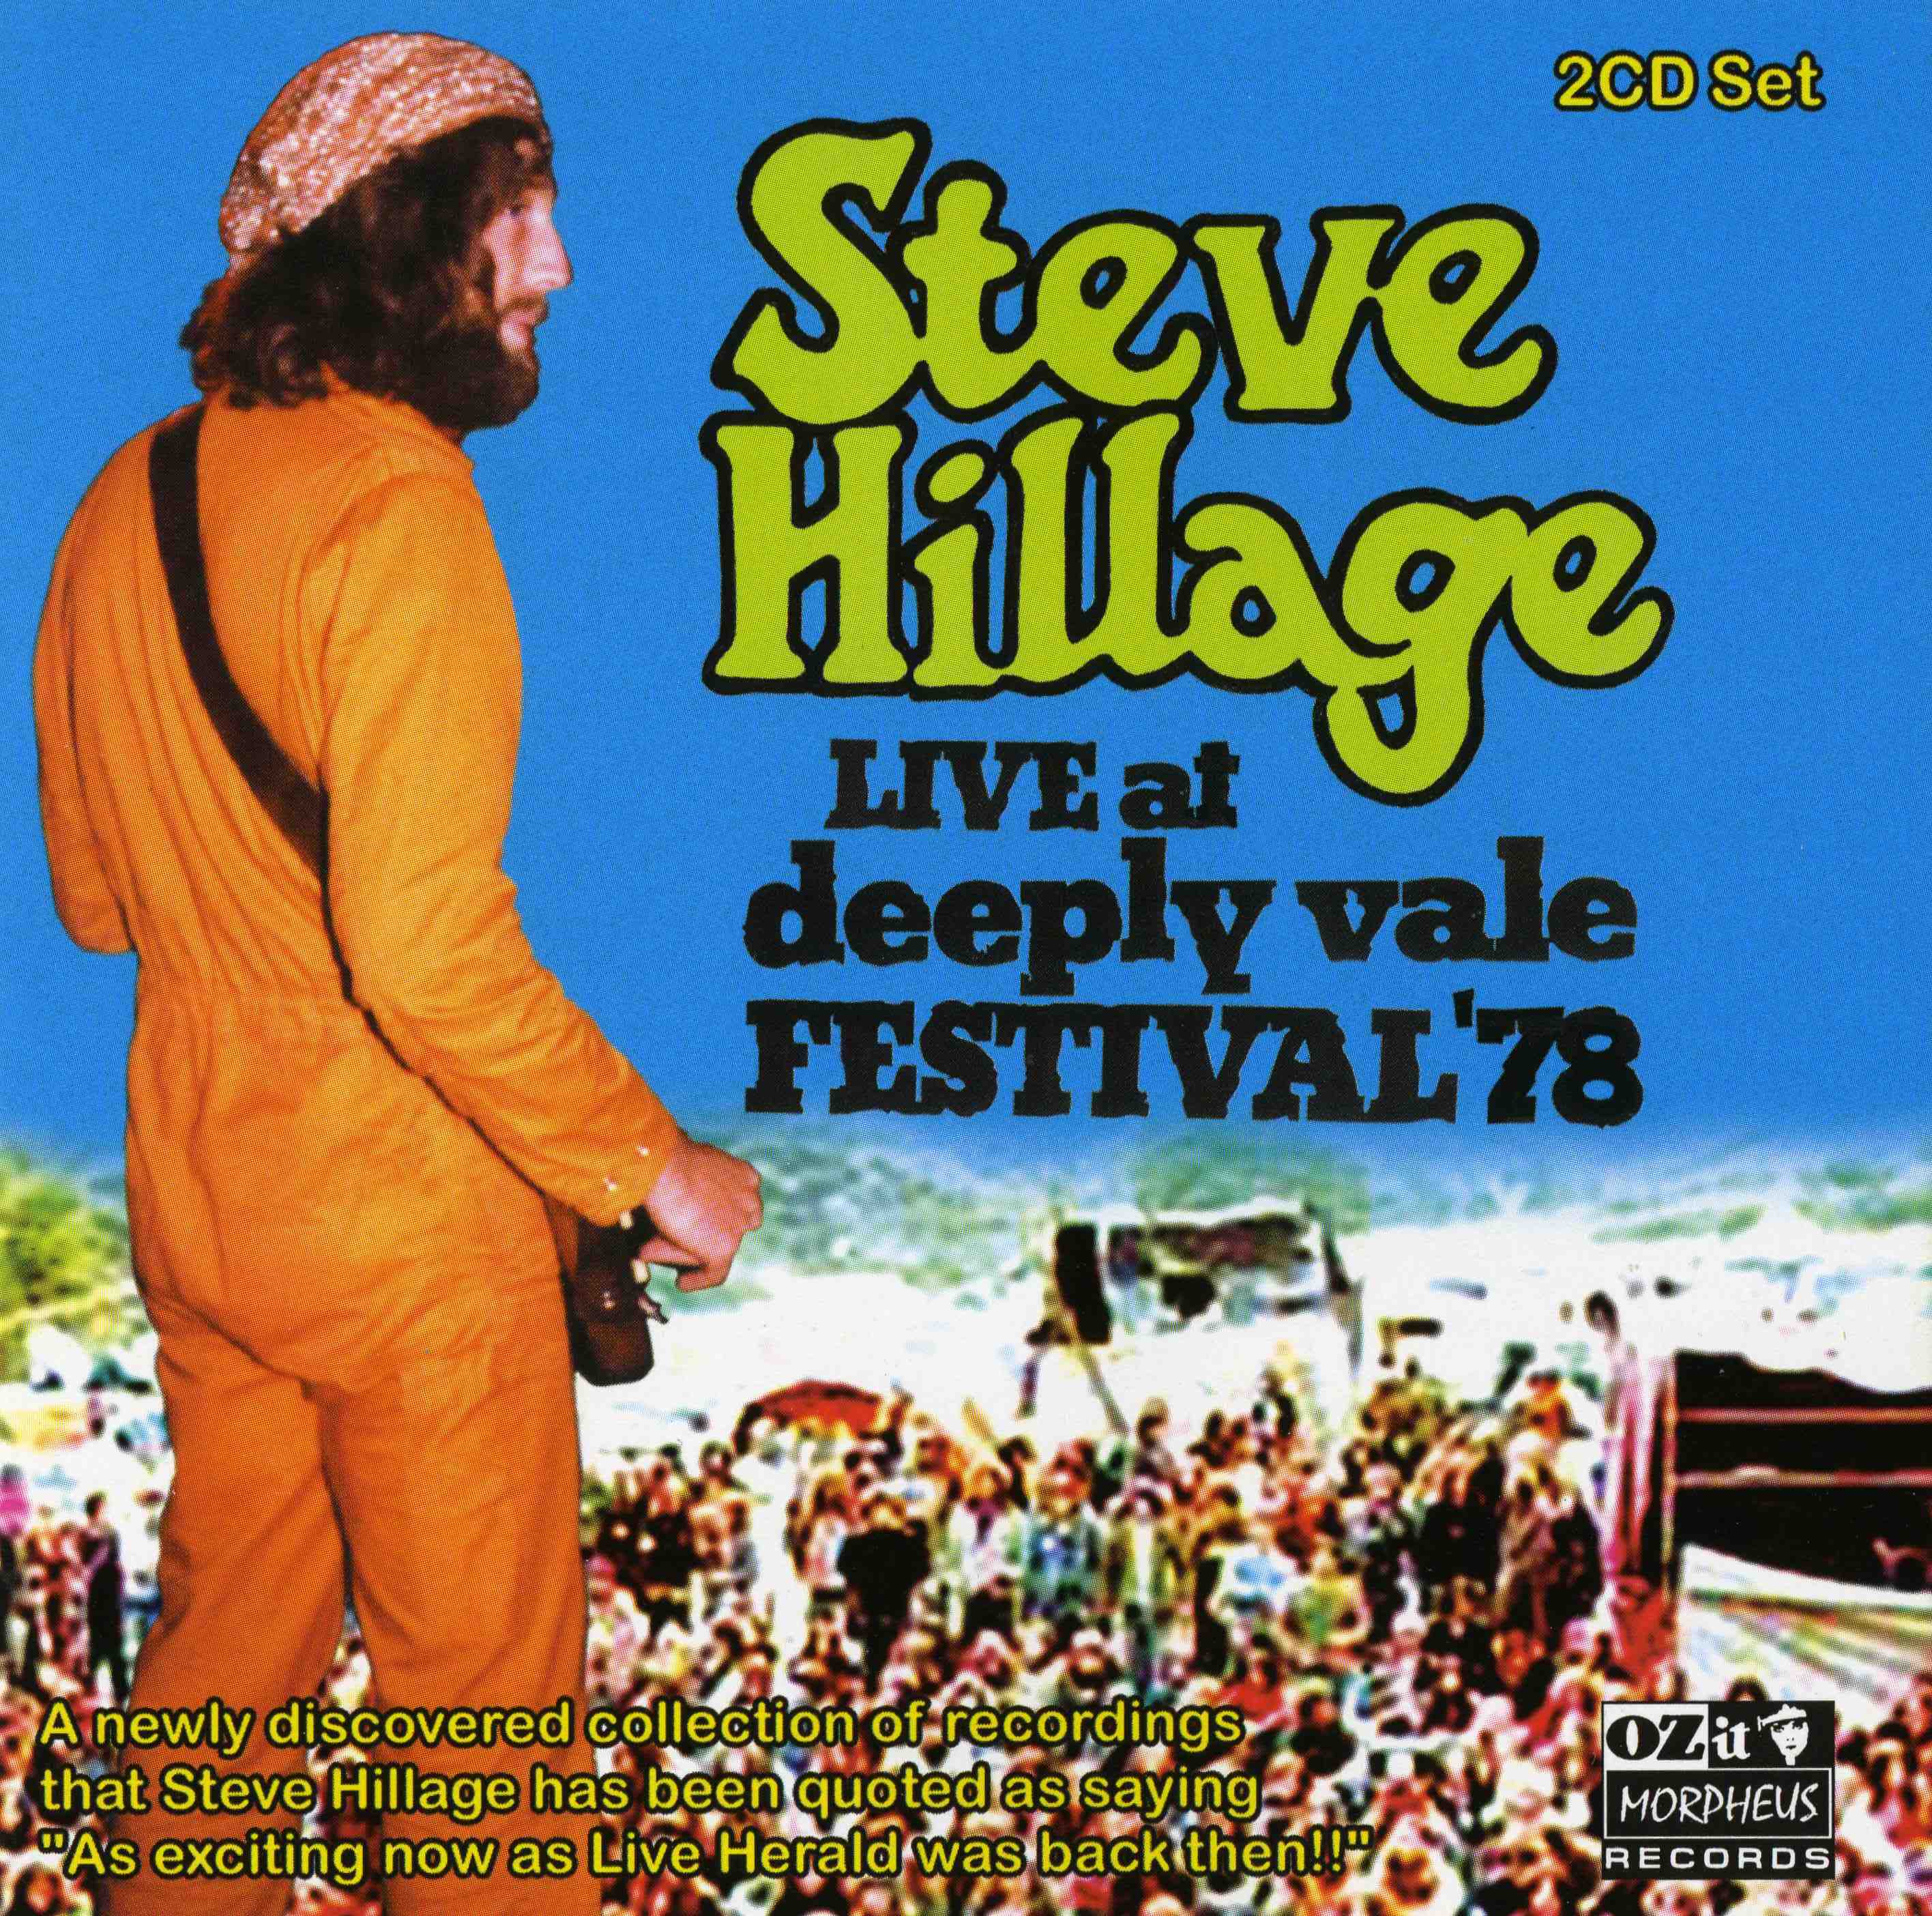 Steve Hillage Live at Deeply Vale Festival 78 album cover